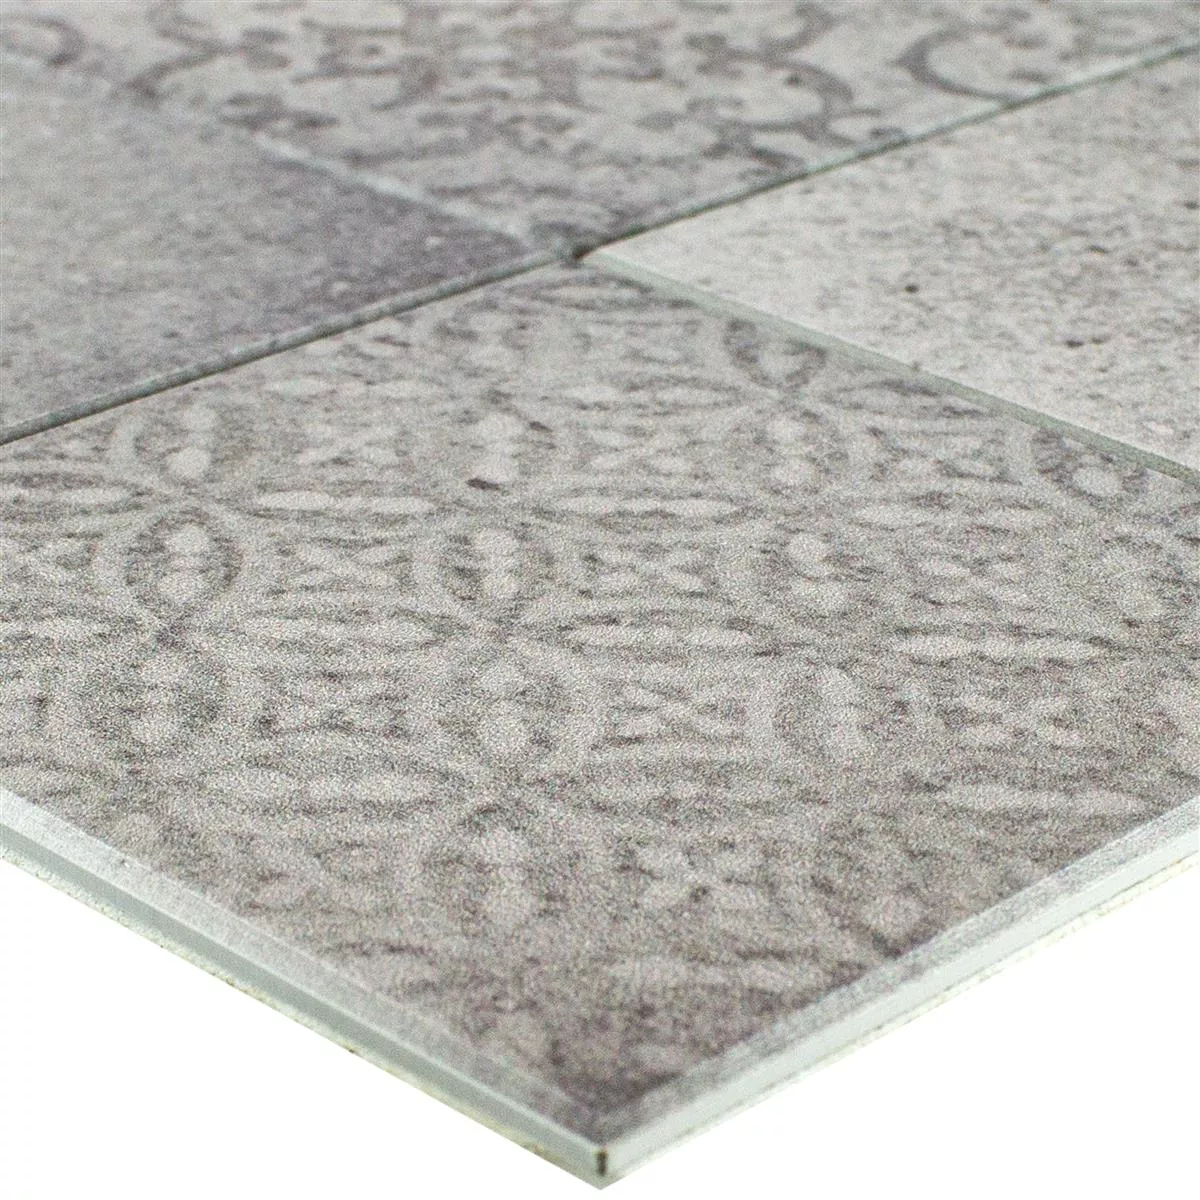 Sample Vinyl Mosaic Tiles Stowe Self Adhesive Stone Optic Grey